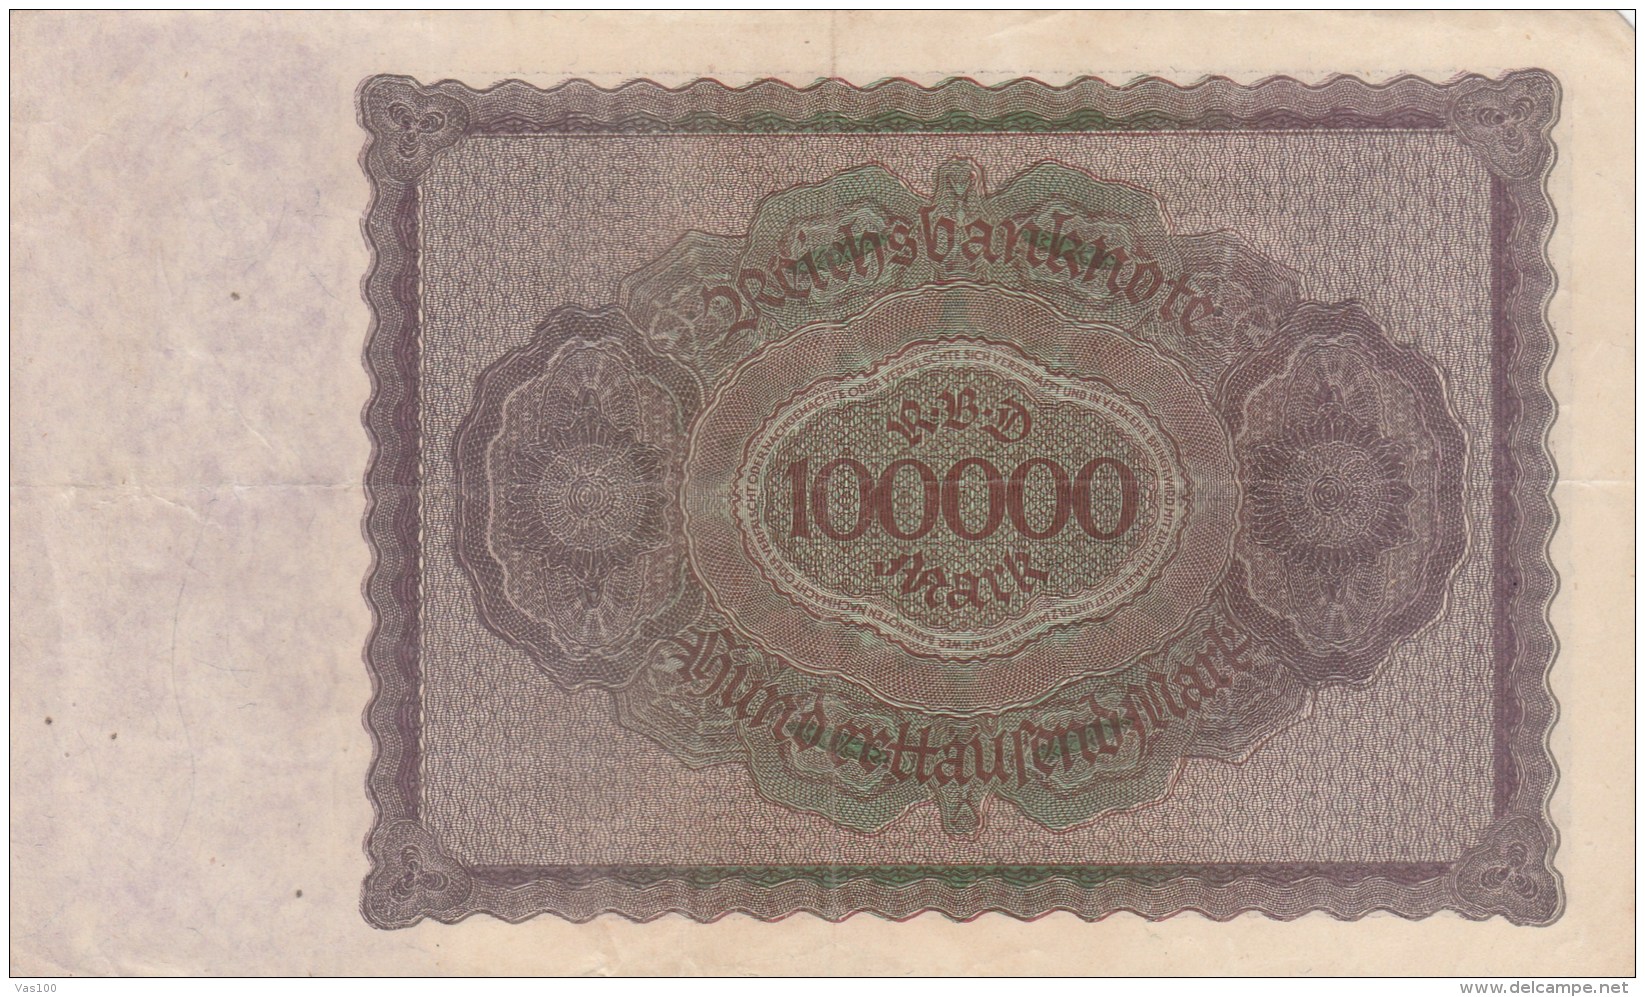 100.000 MARK, REICHSBANKNOTE, 1923, PAPER BANKNOTE, GERMANY. - 100000 Mark